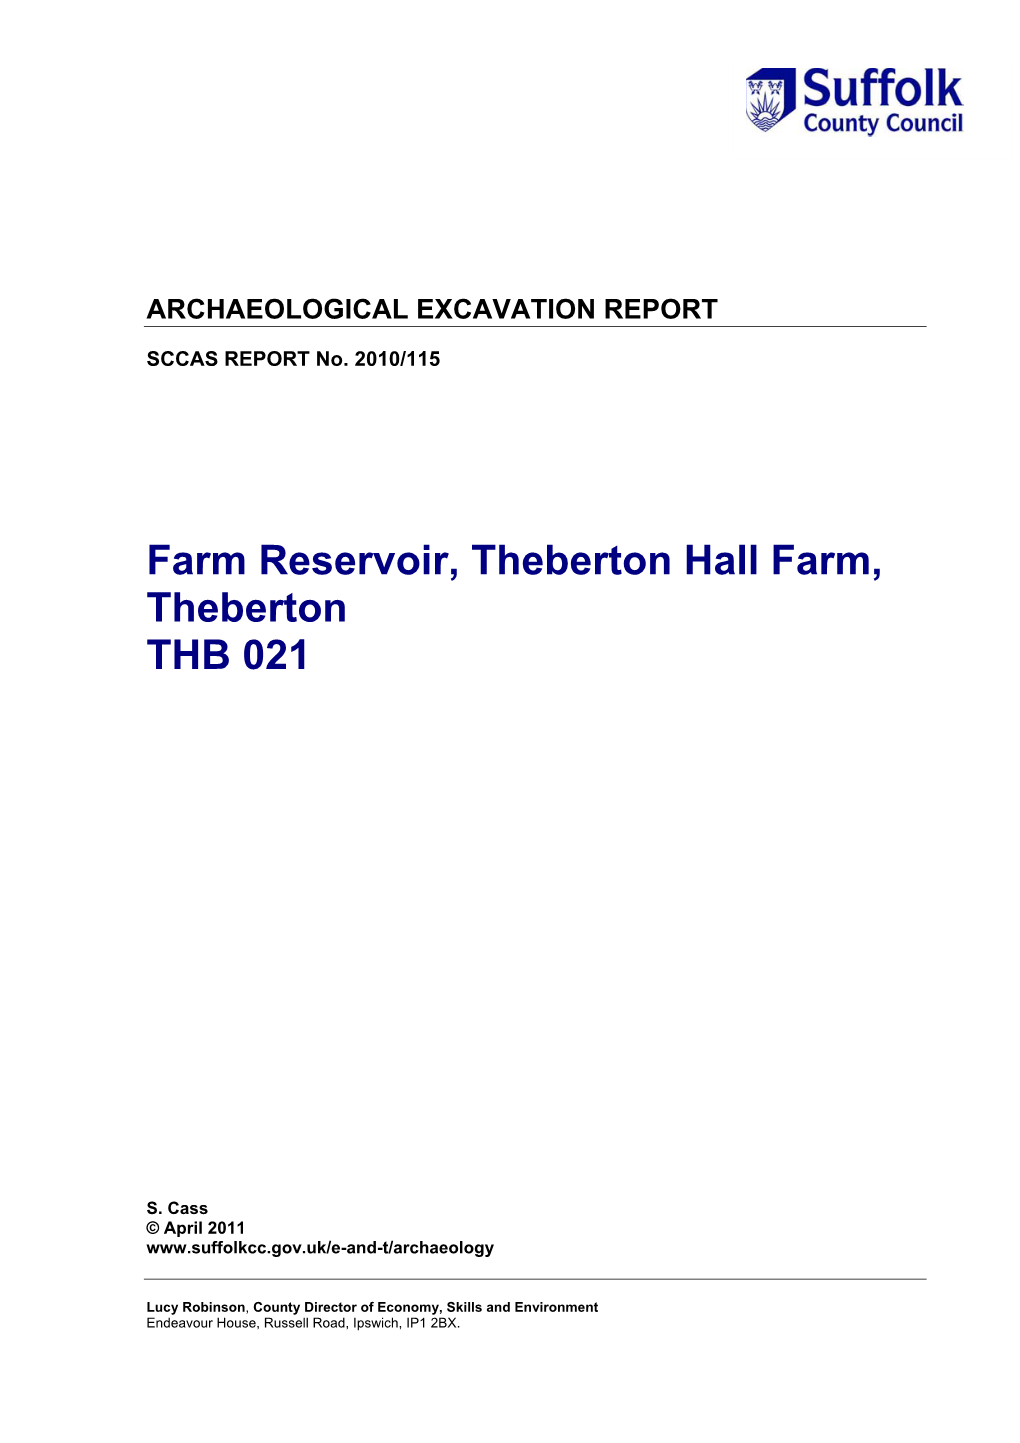 Farm Reservoir, Theberton Hall Farm, Theberton THB 021